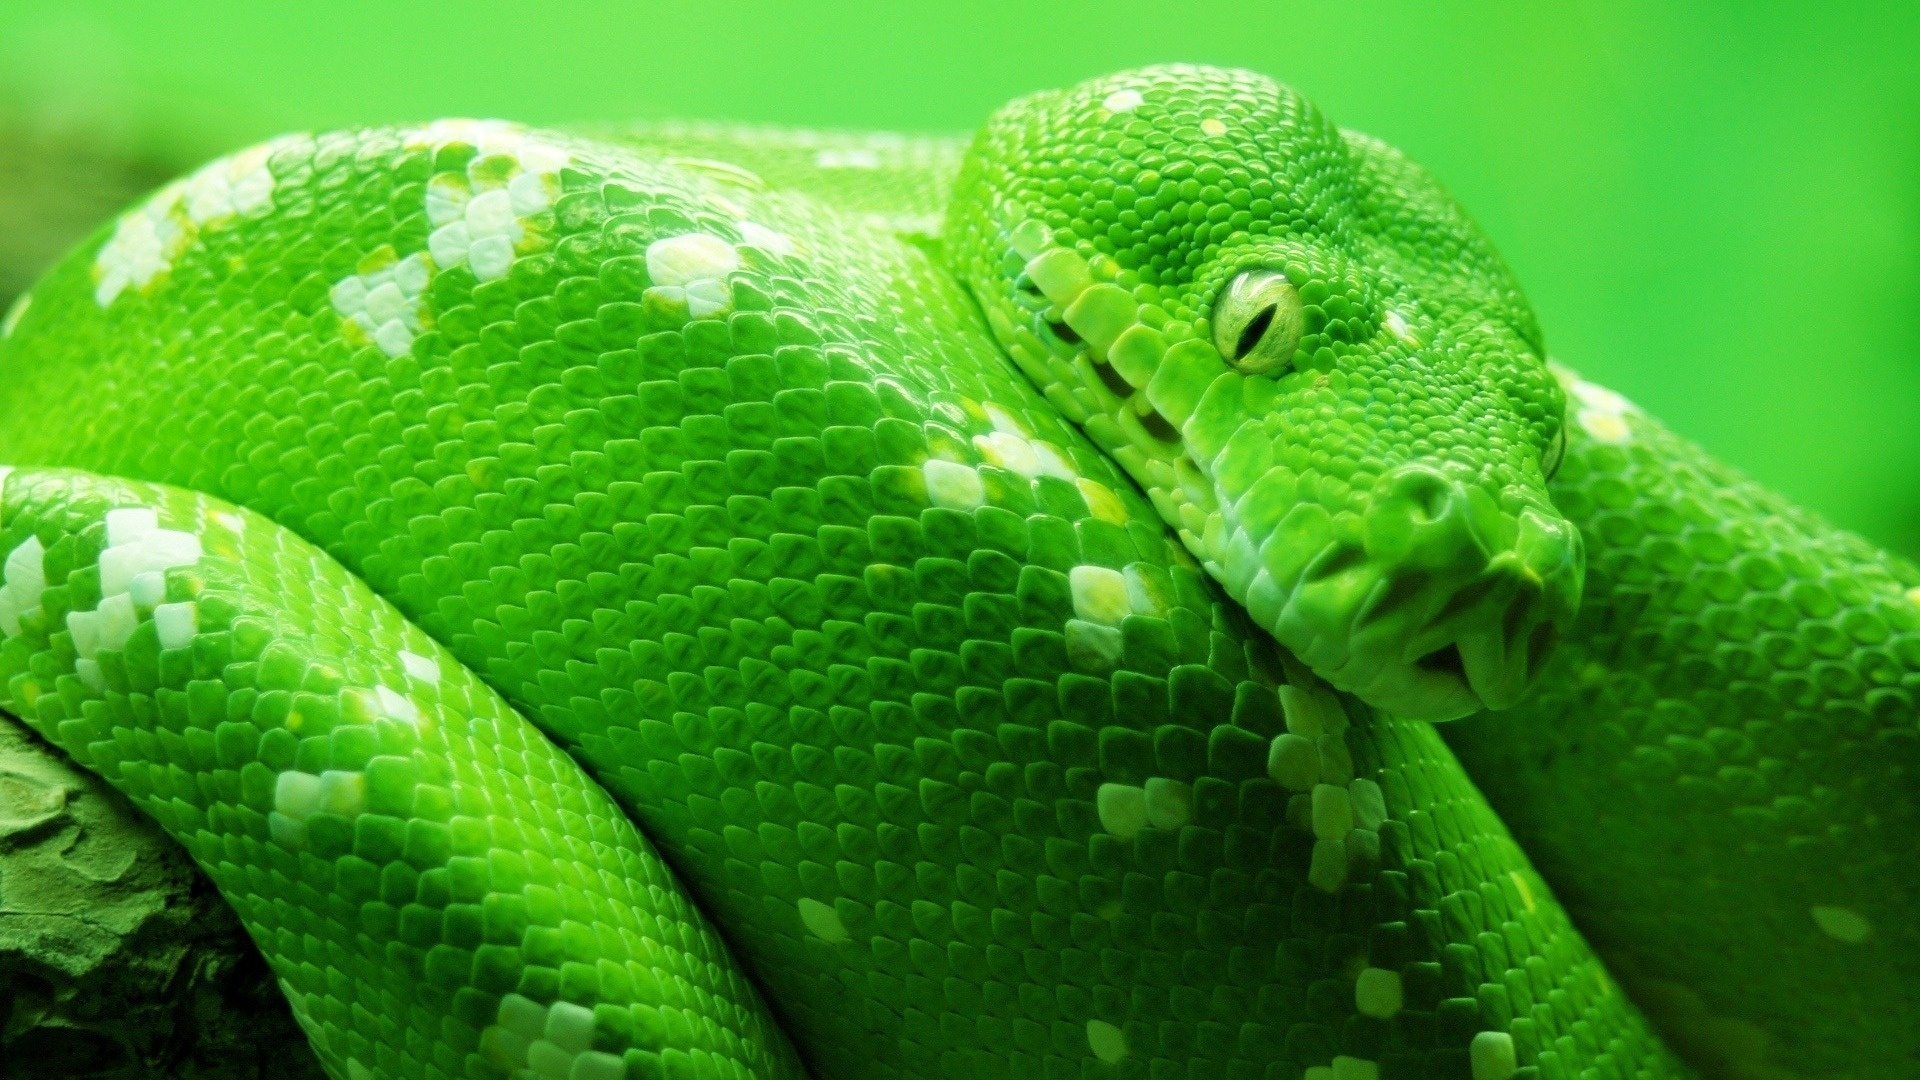 fond d'écran de serpent,reptile,vert,couleuvre verte lisse,serpent,serpent